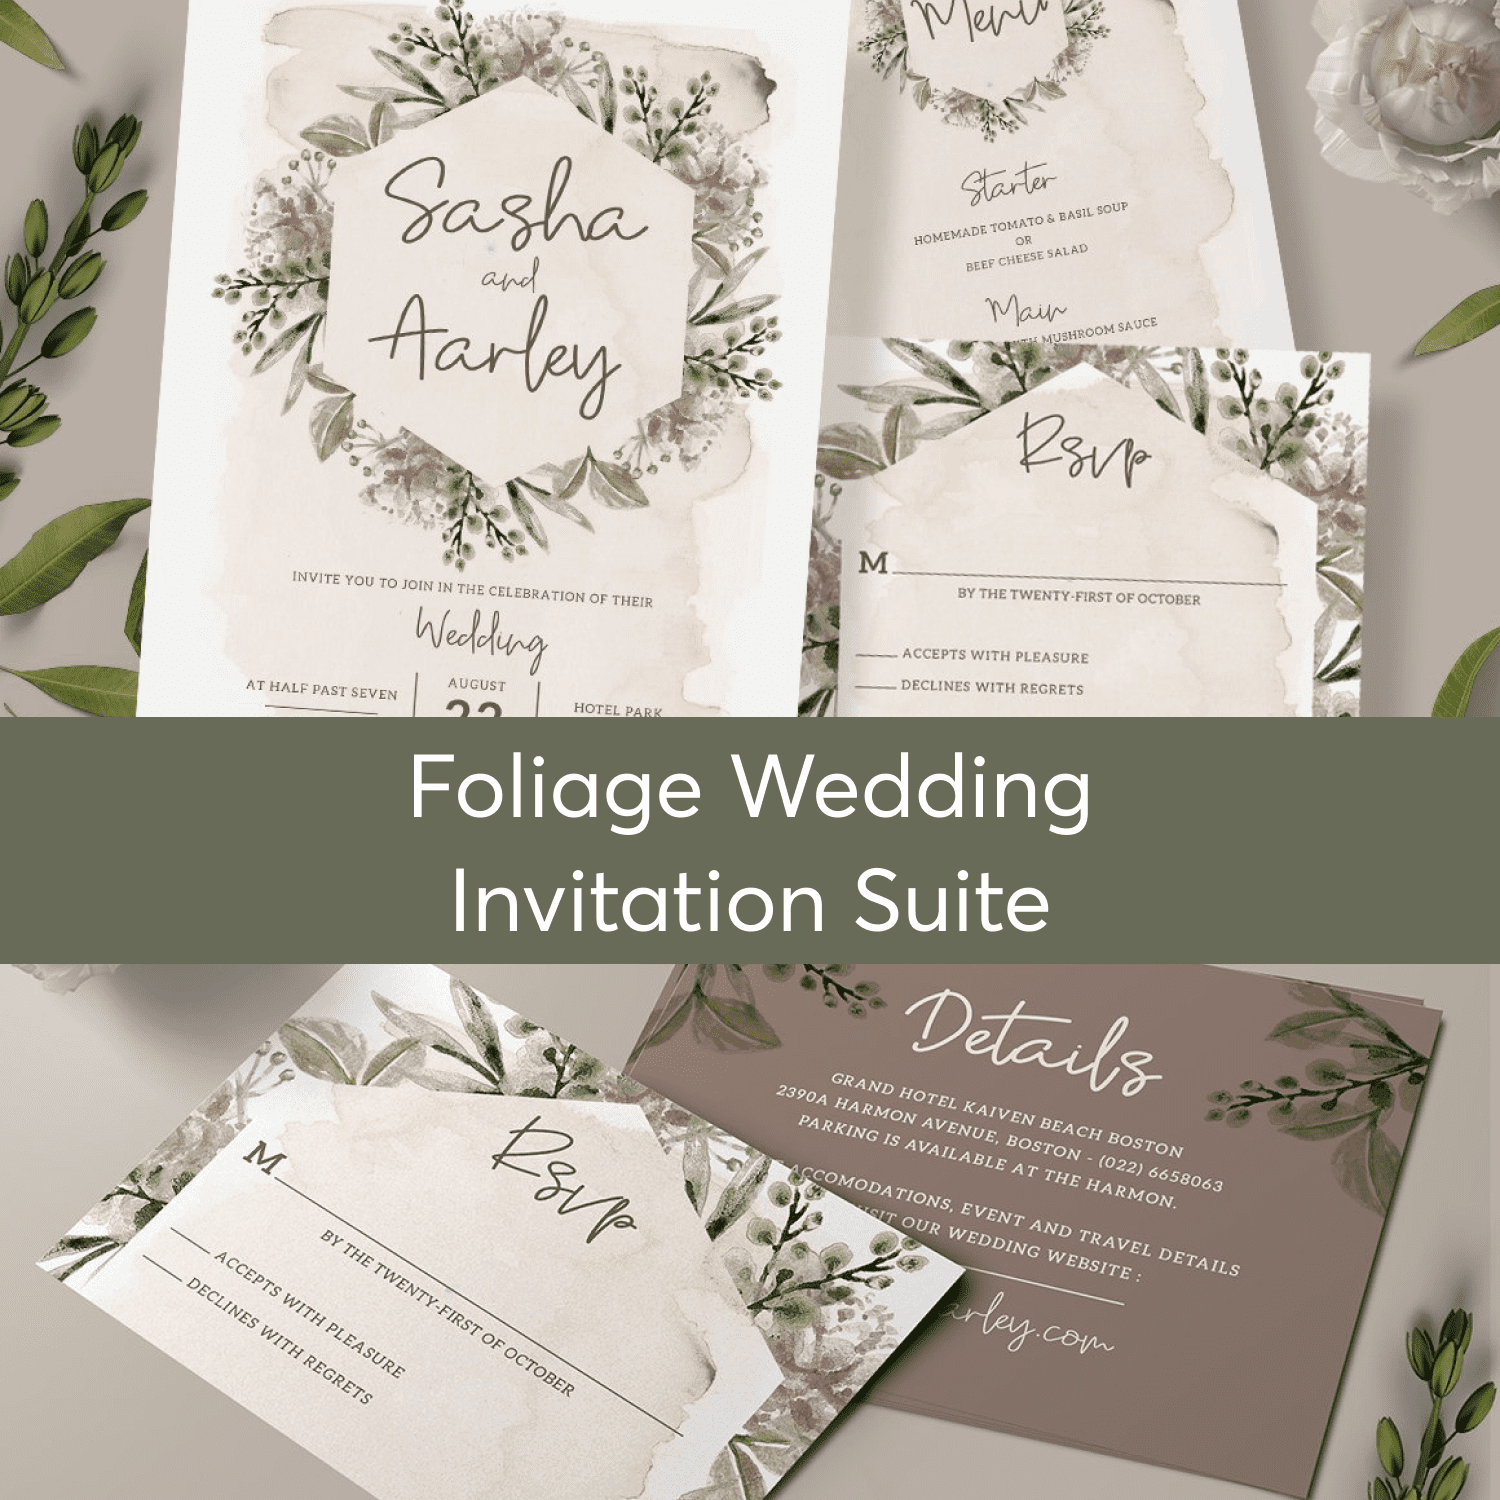 Foliage Wedding Invitation Suite preview 1500x1500 1